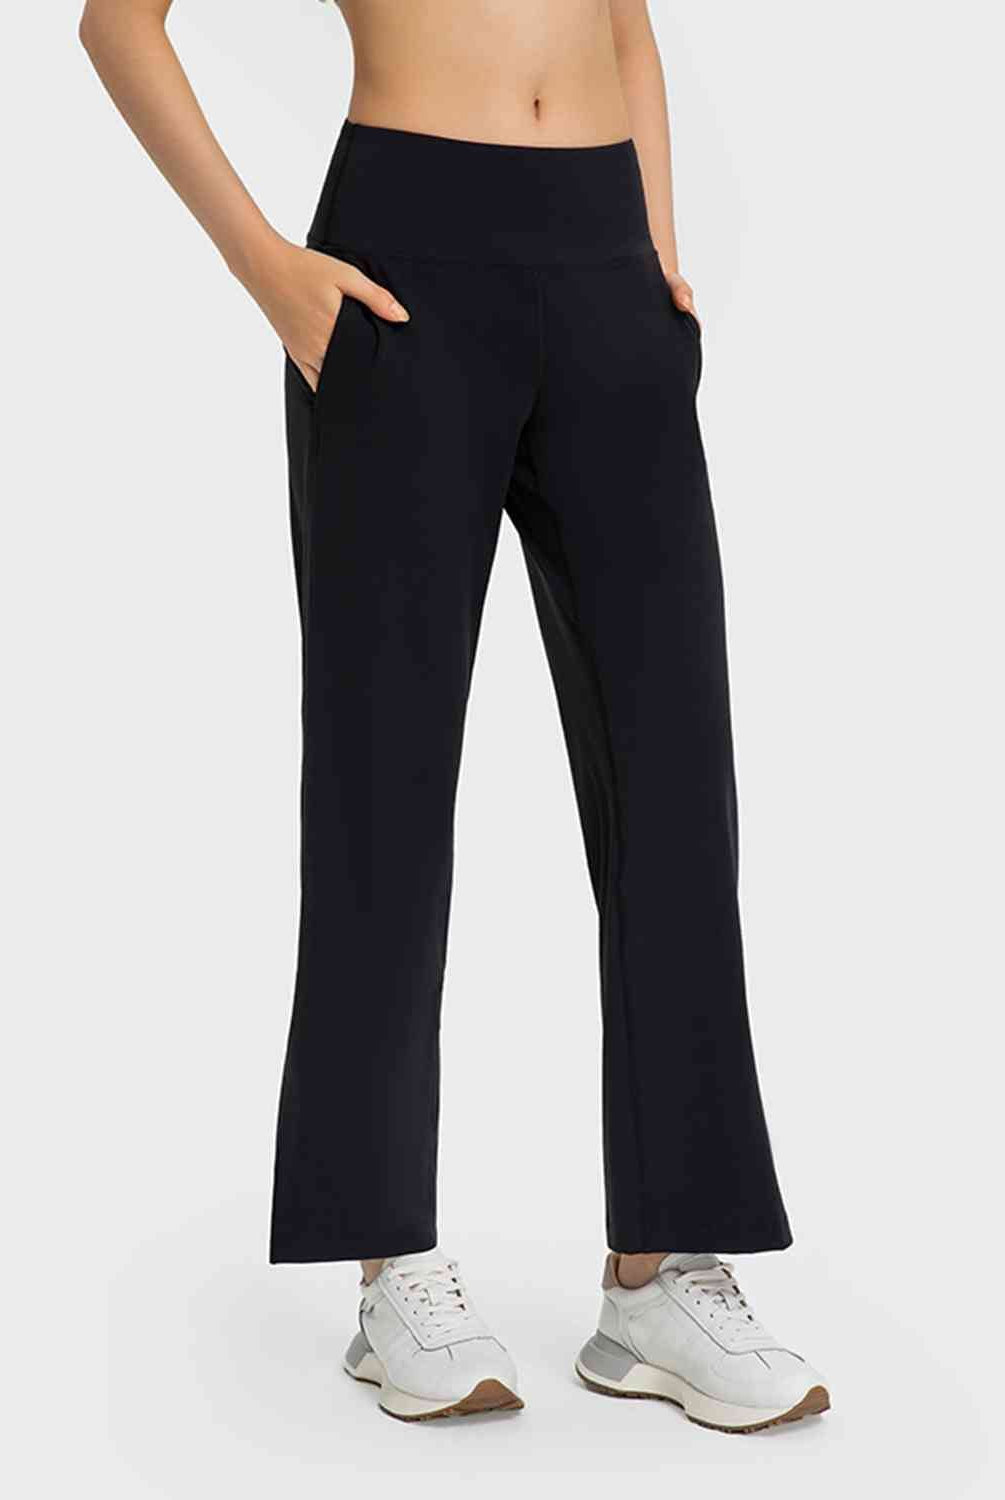 Wide Leg Slit Sport Pants with Pockets - GemThreads Boutique Wide Leg Slit Sport Pants with Pockets